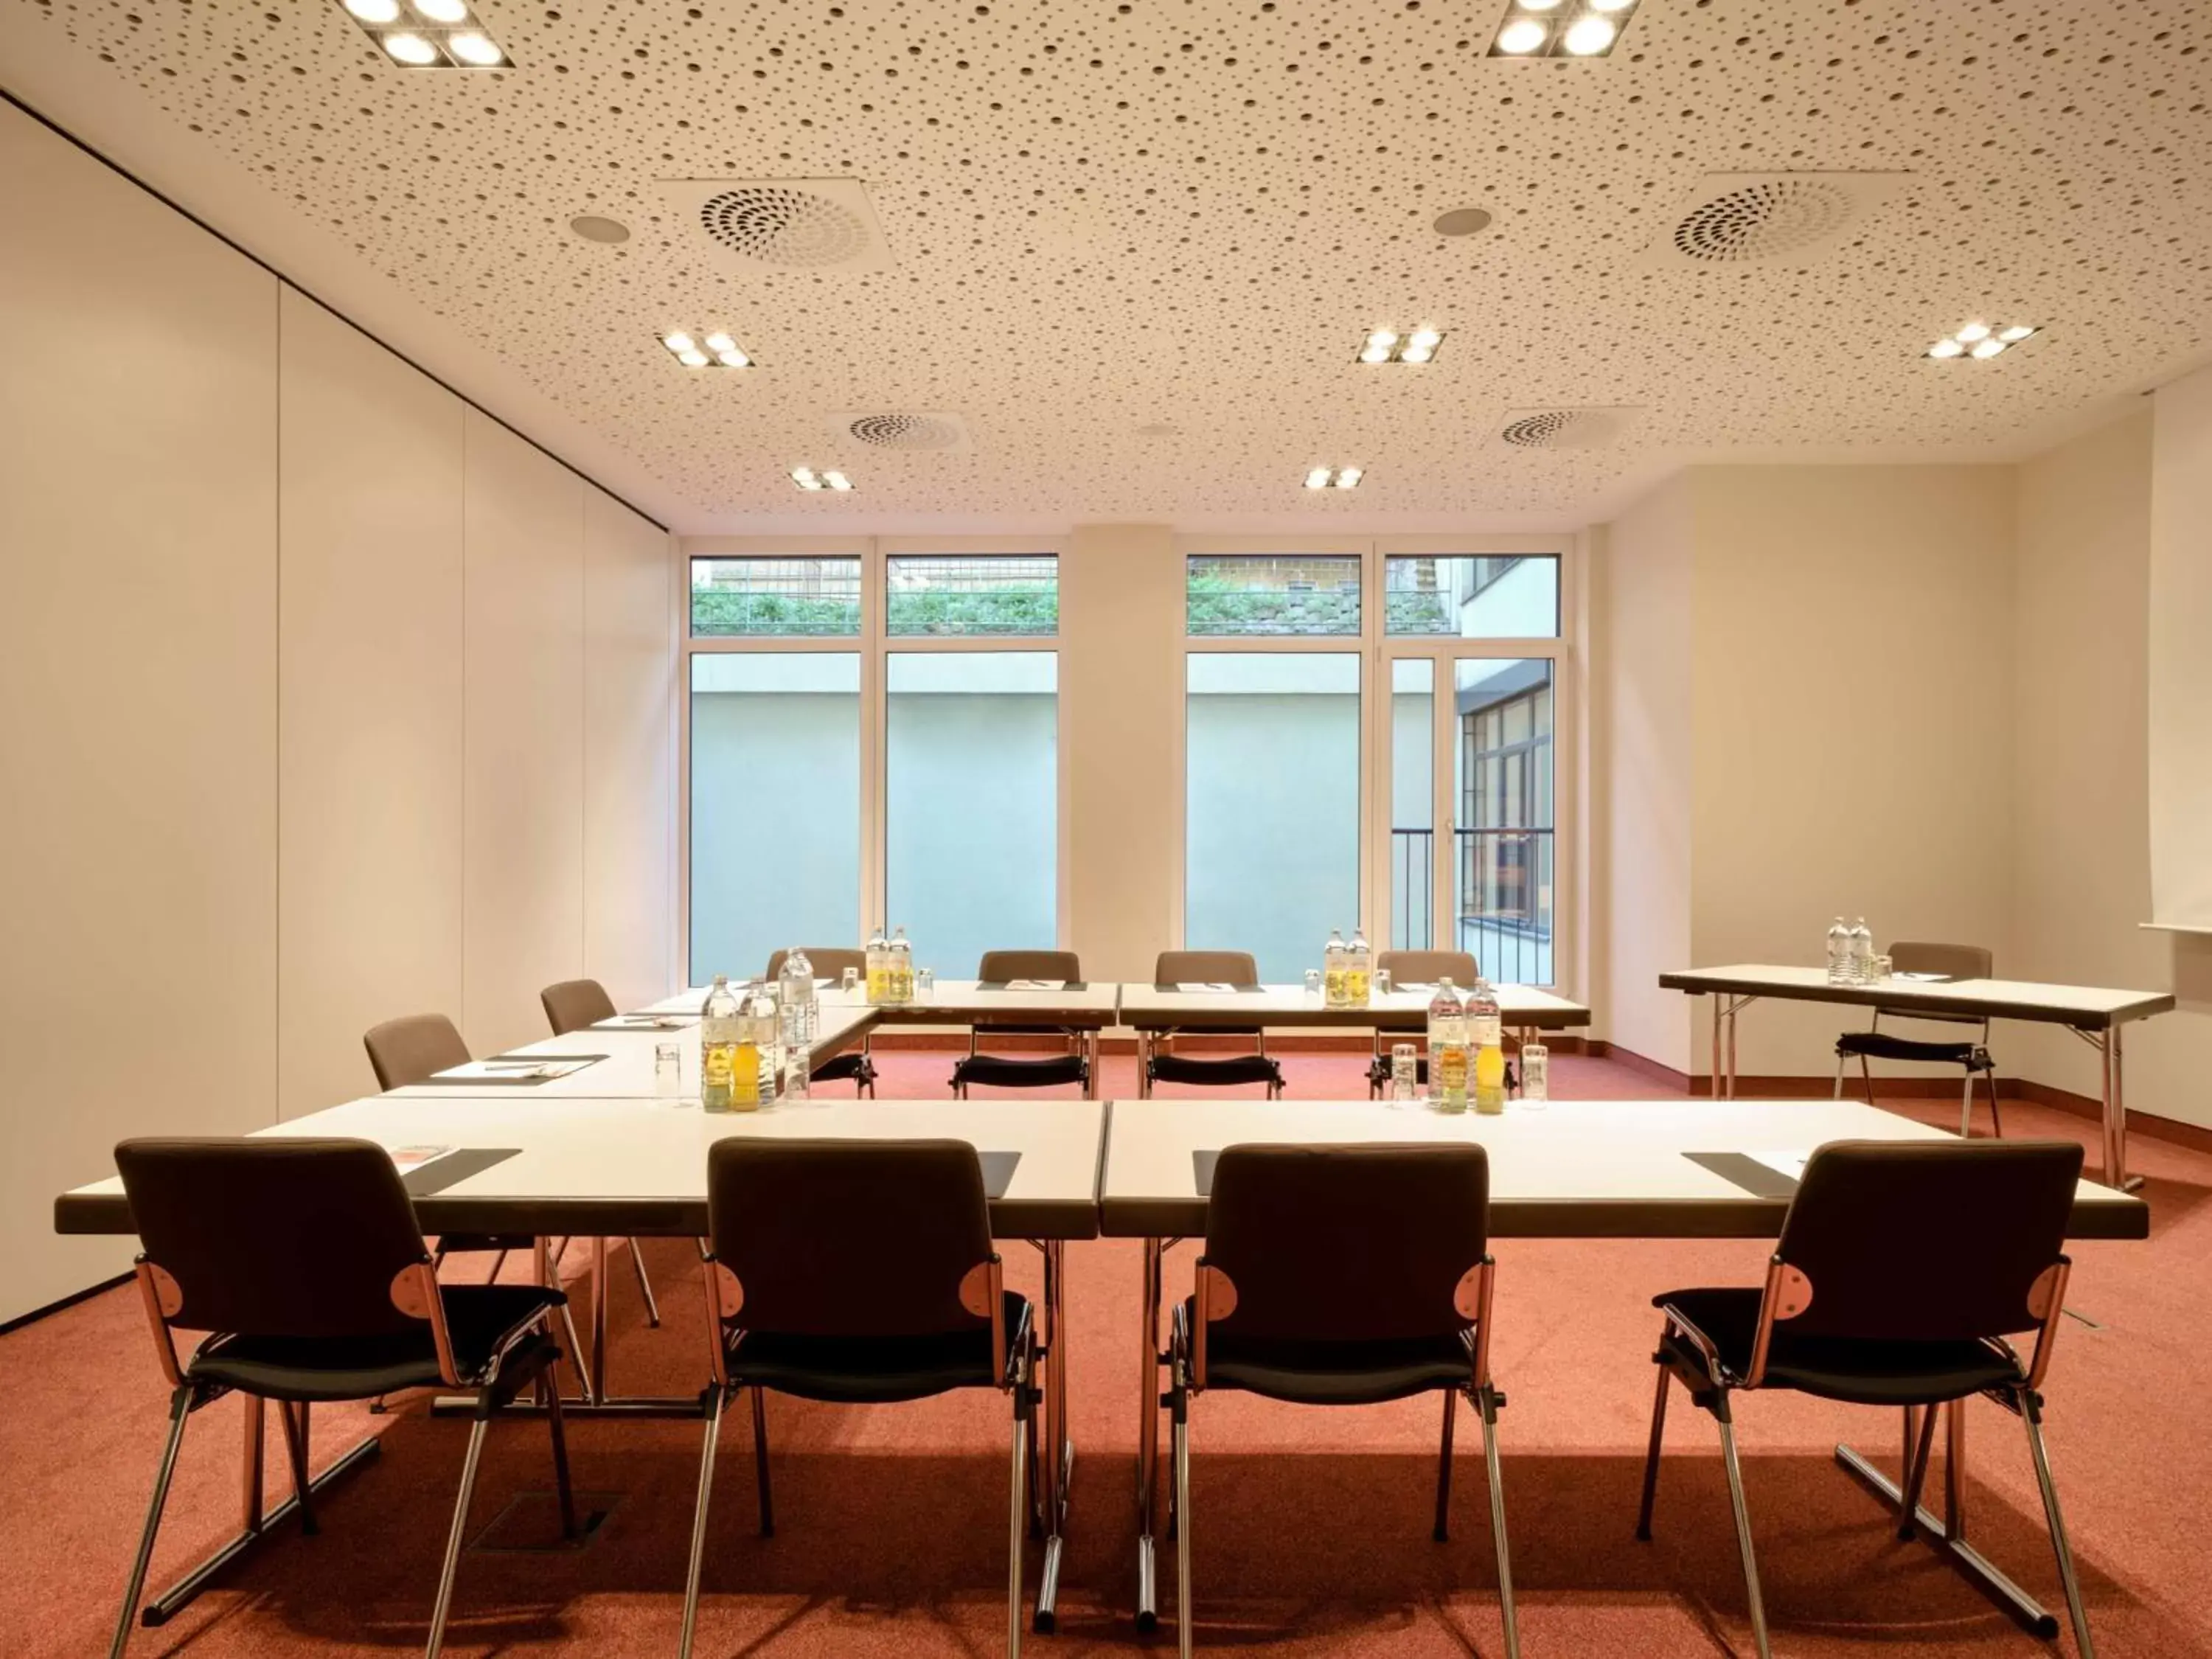 Meeting/conference room in Flemings Hotel Wien-Stadthalle former Flemings Conference Wien